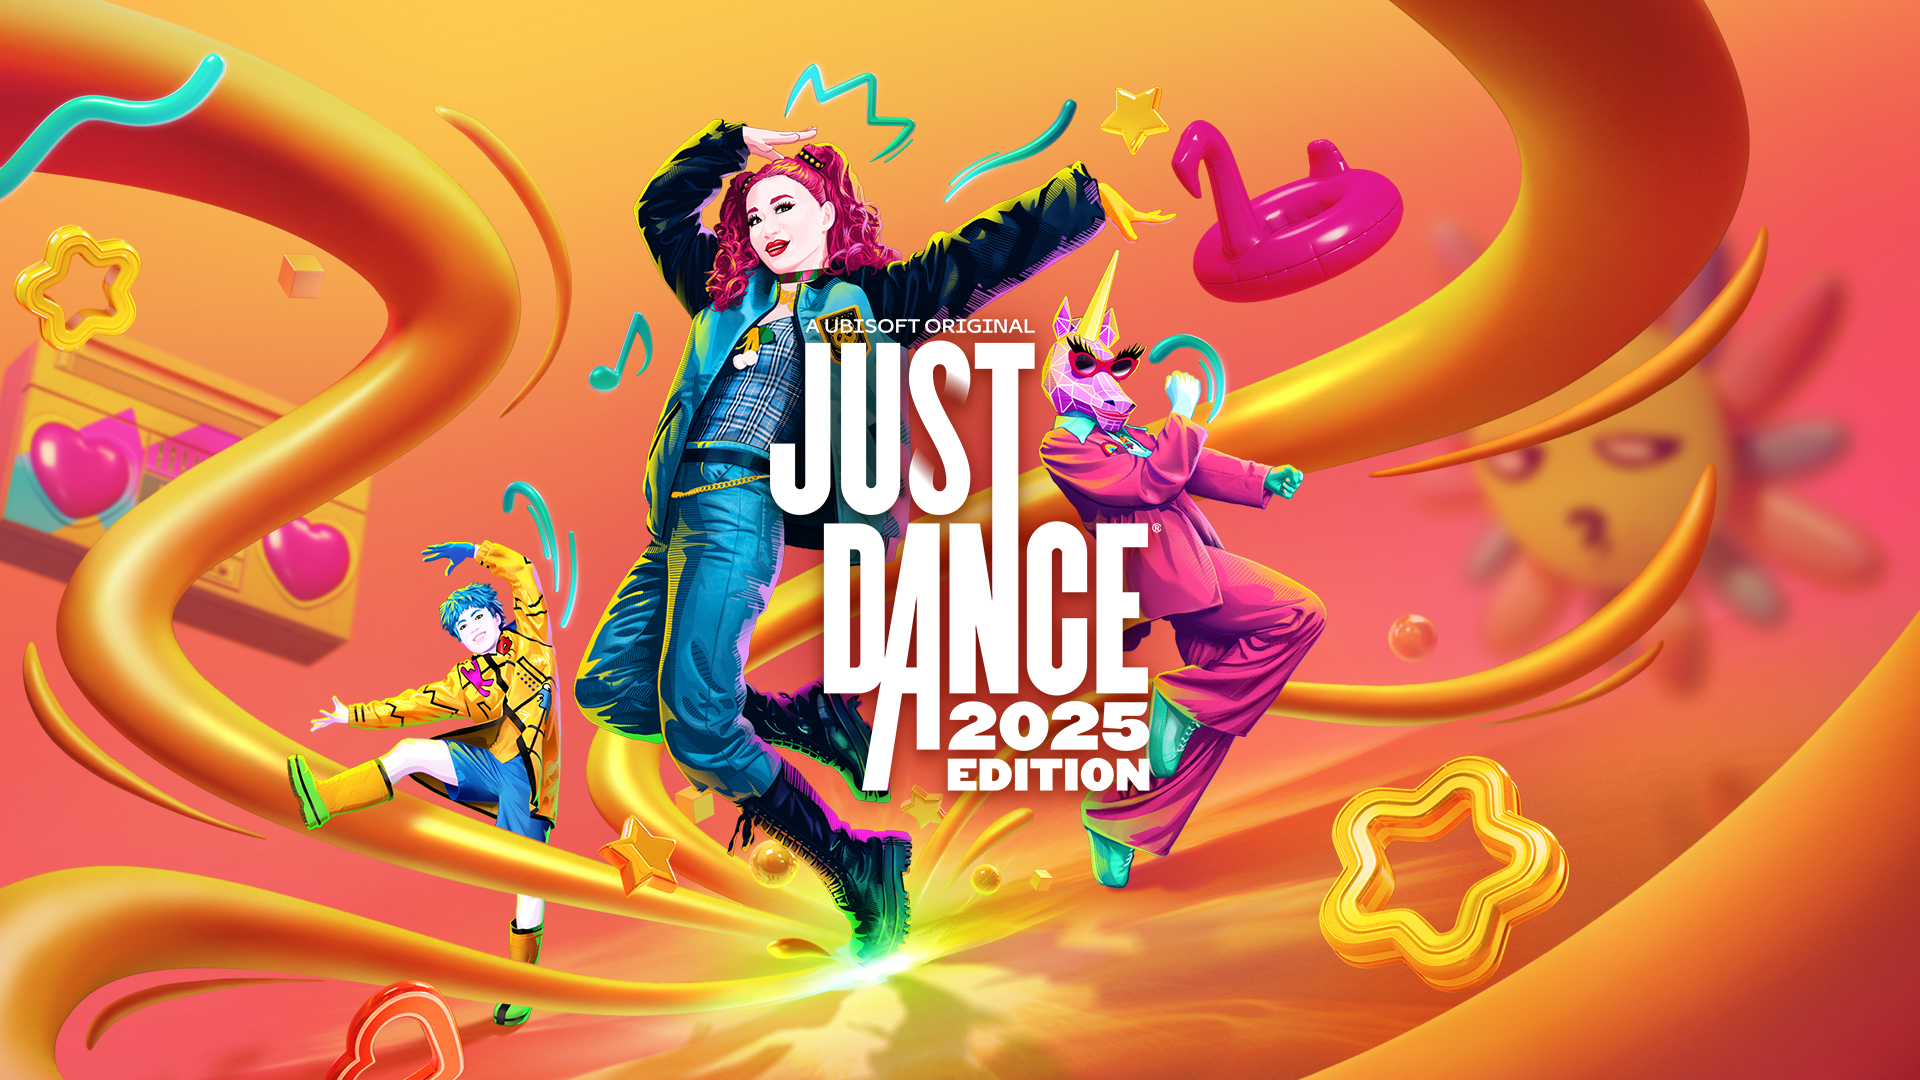 Just Dance 2025, Ubisoft